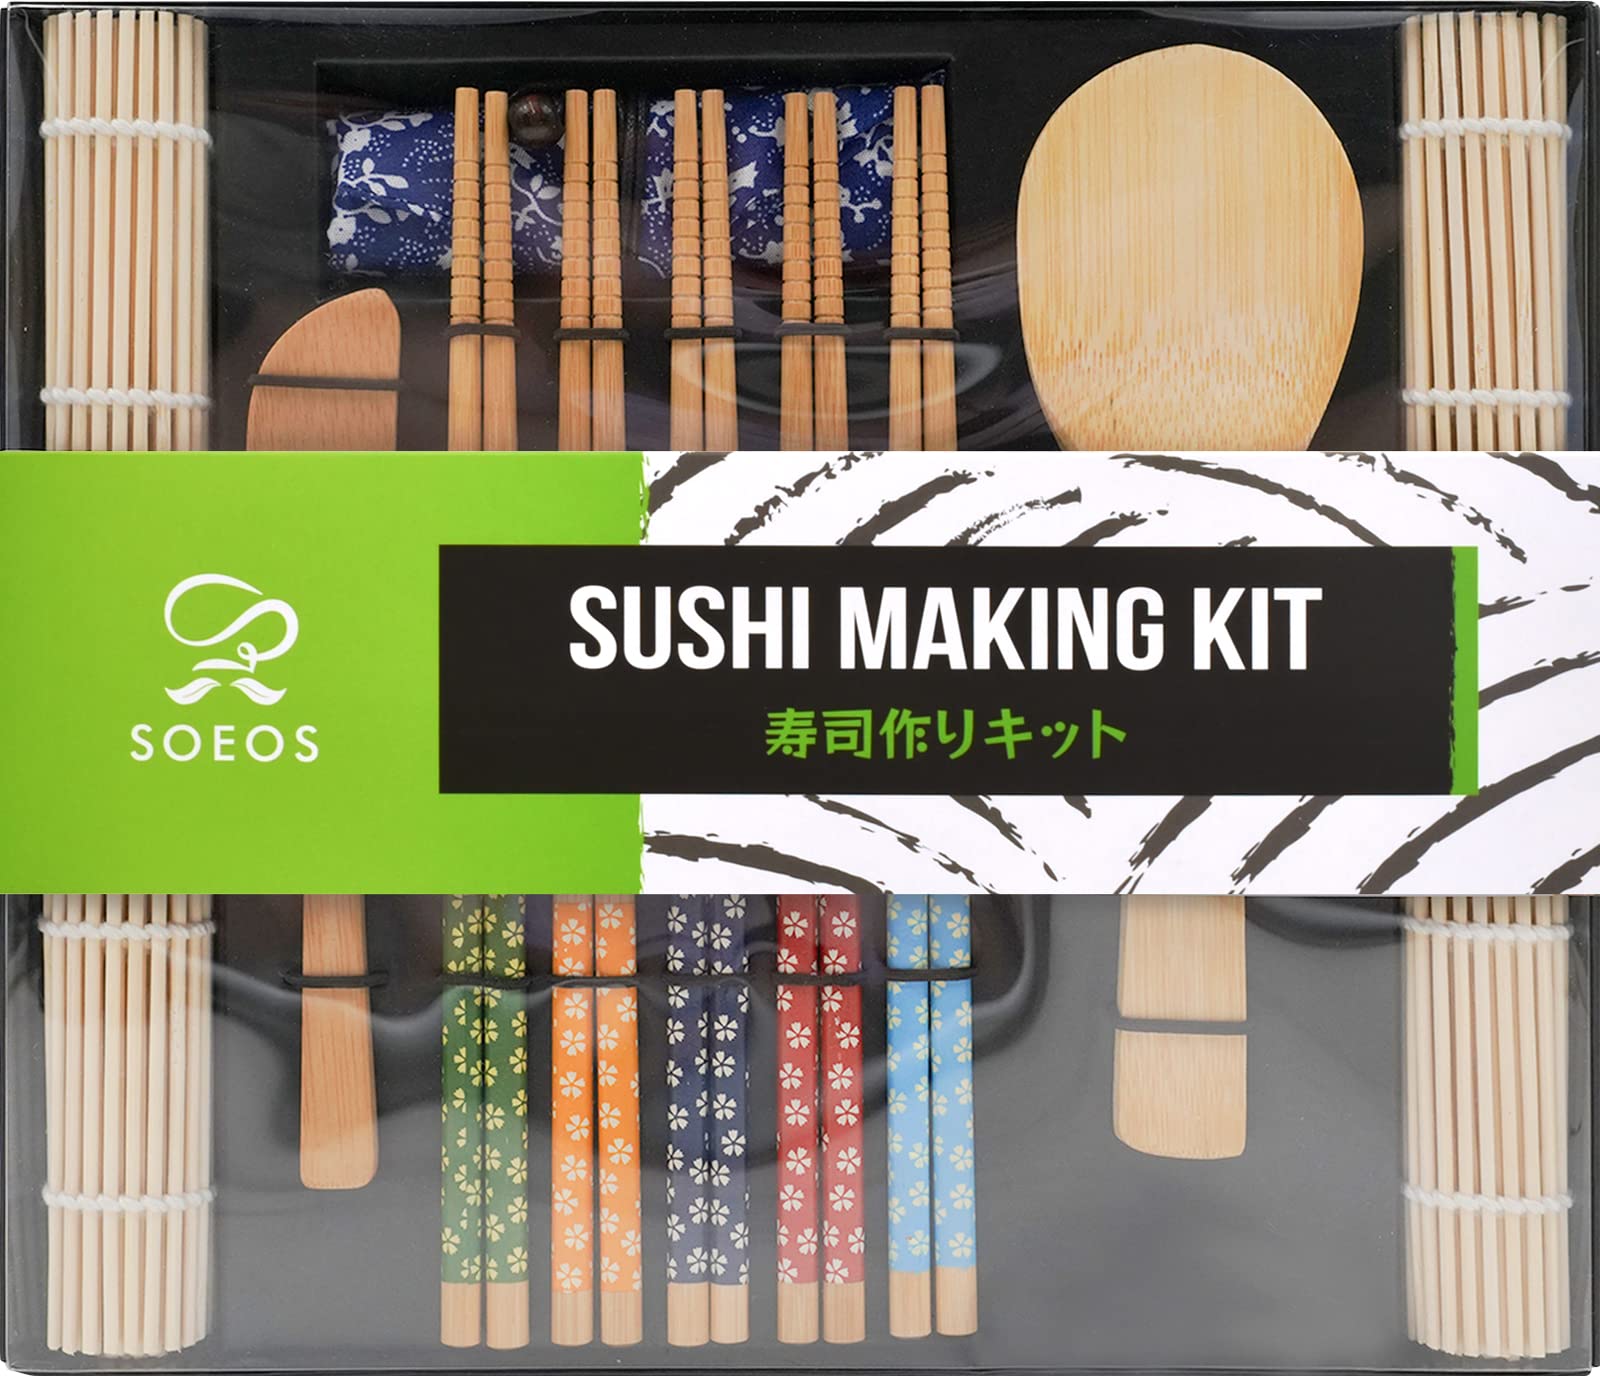 10-Piece Soeos Beginner Sushi Making Kit $10 + Free Shipping w/ Amazon Prime or Orders $25+